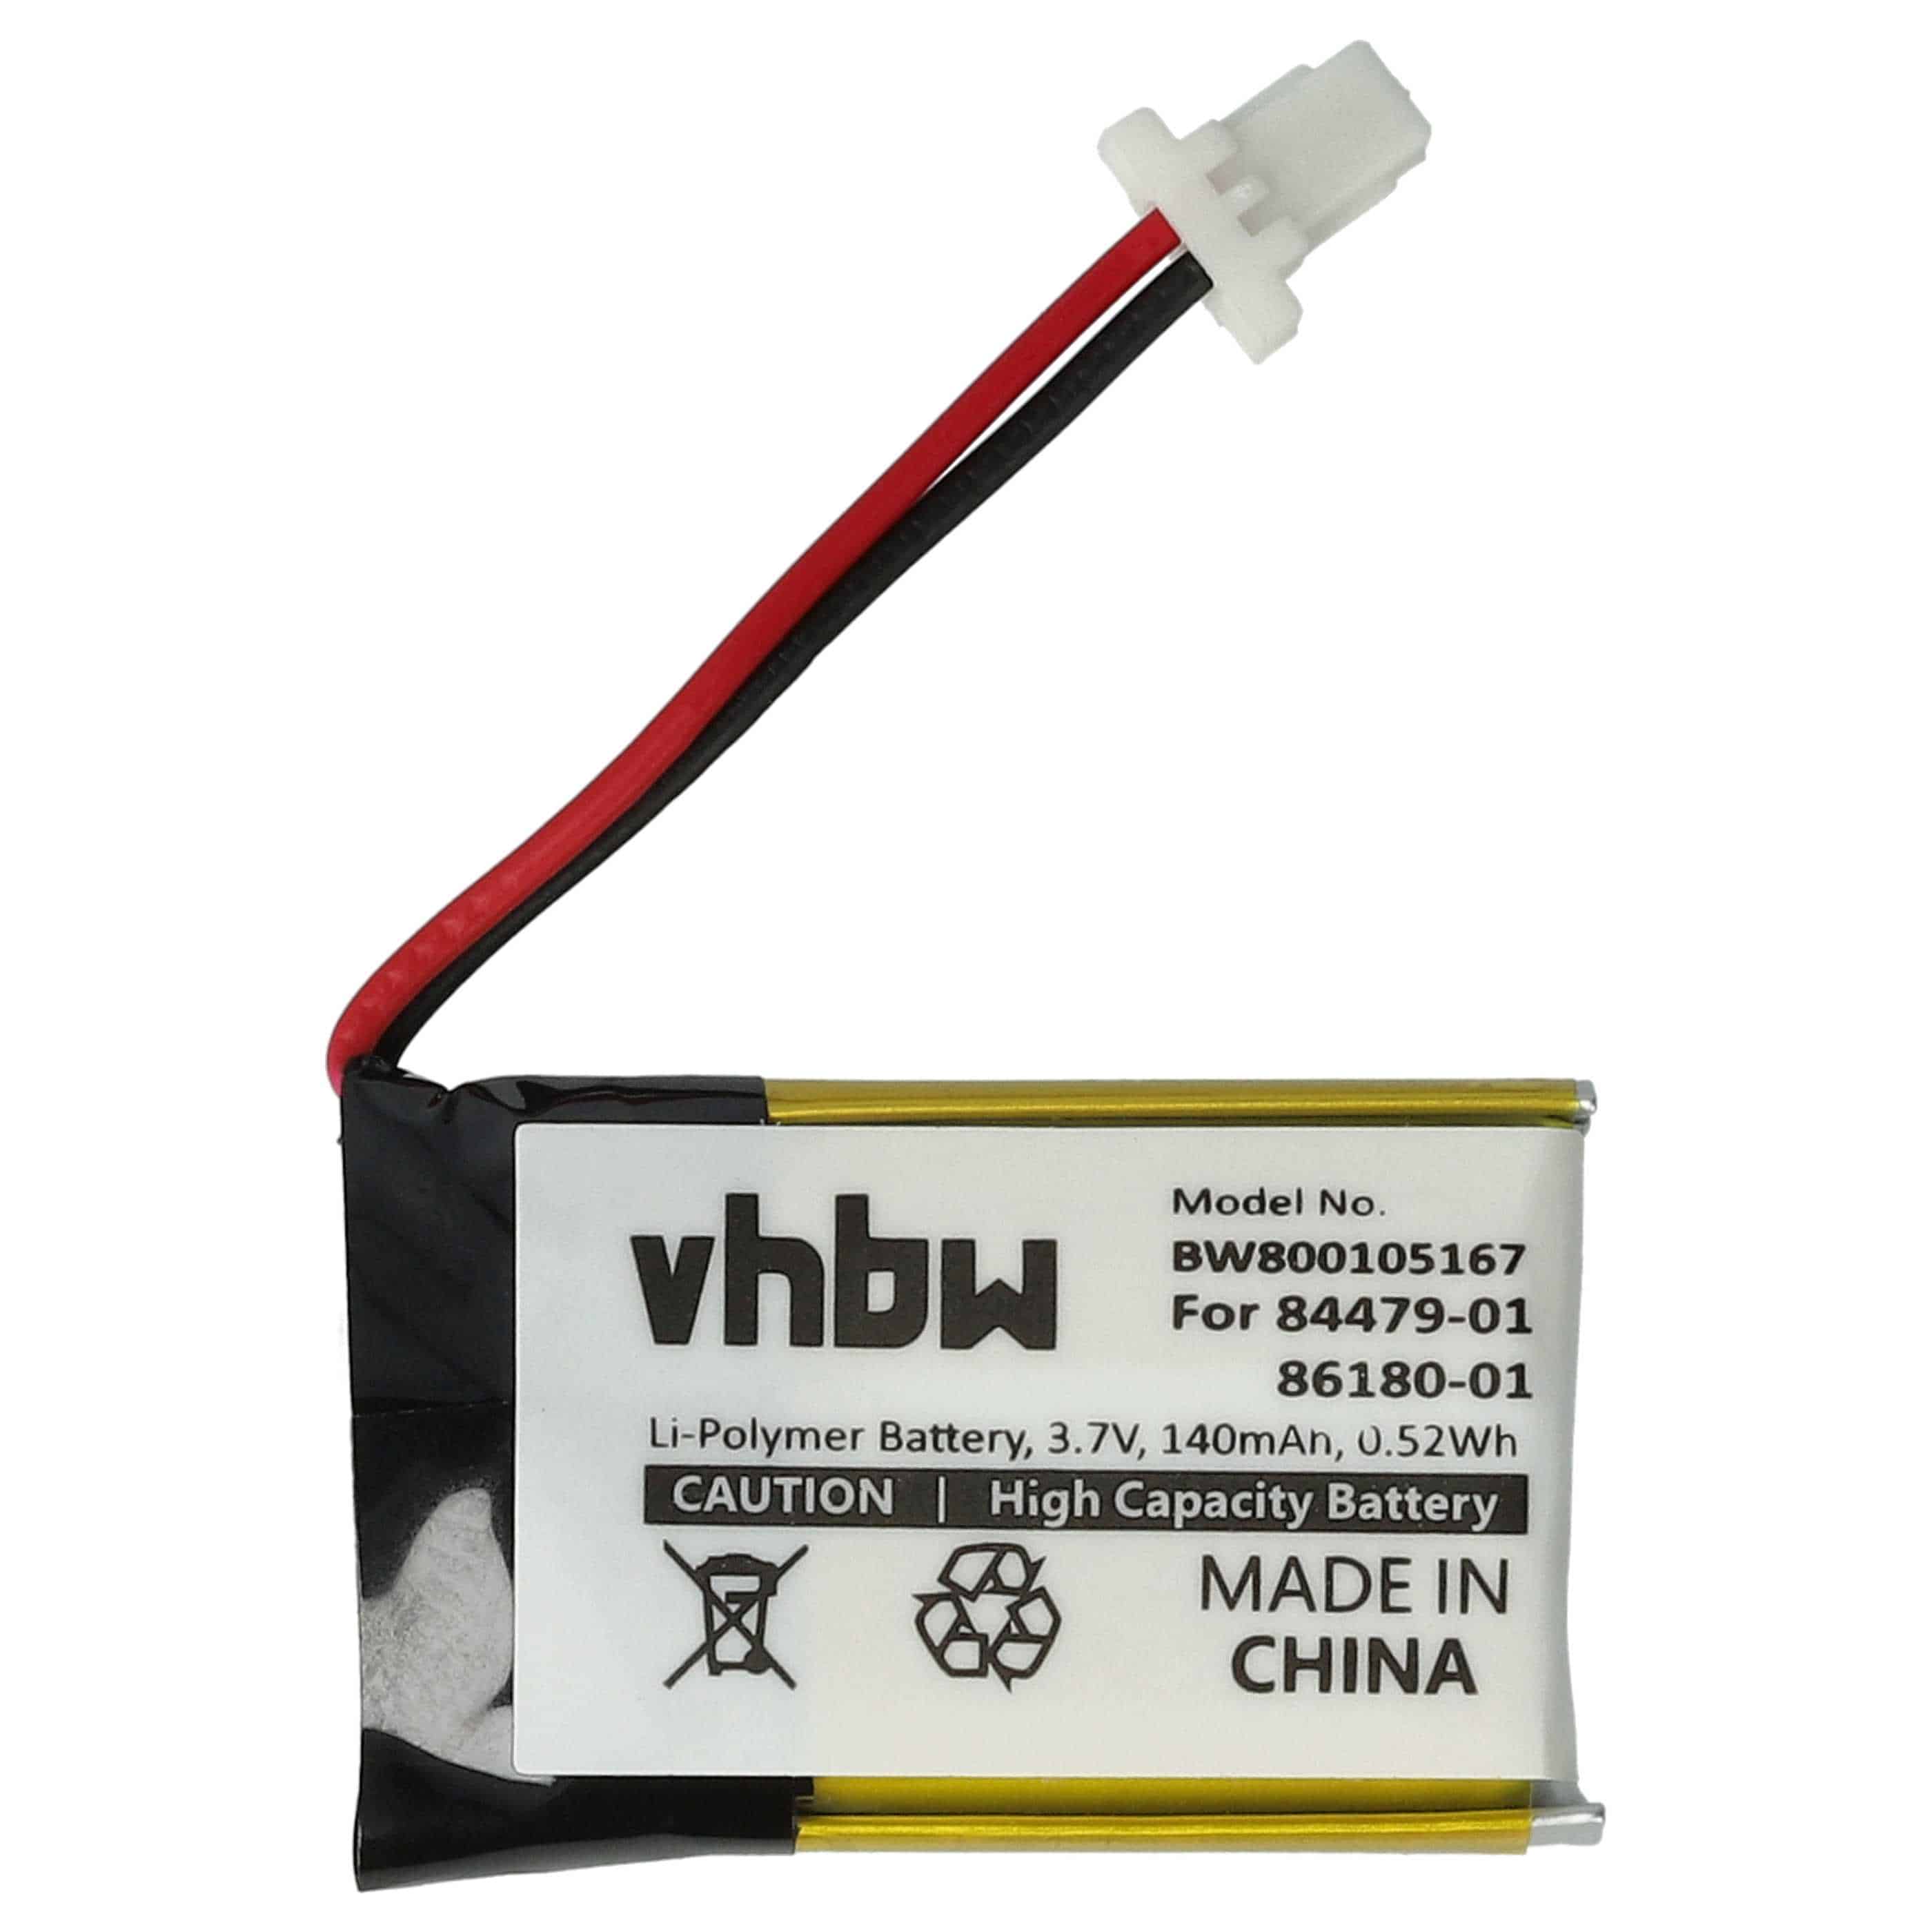 Wireless Headset Battery Replacement for Plantronics 84479-01, 86180-01 - 140 mAh 3.7 V Li-polymer